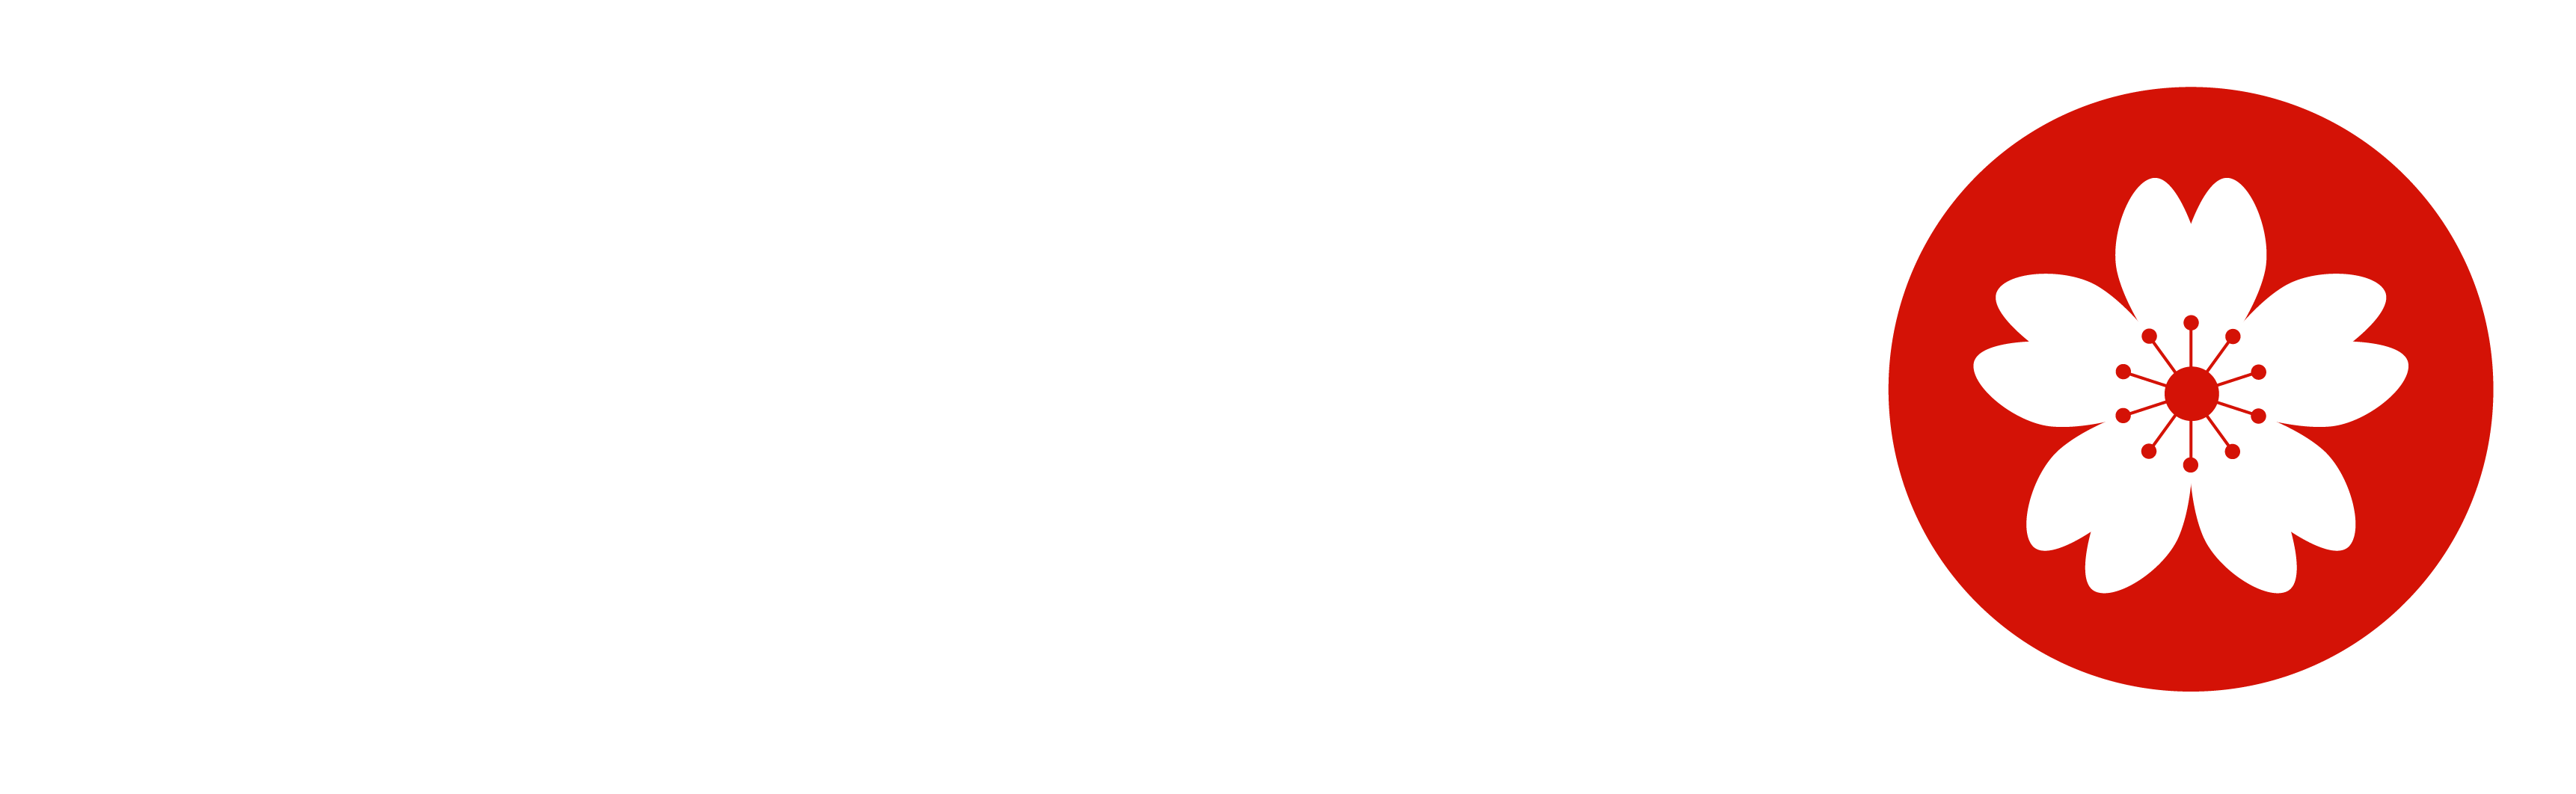 Program - Harucon 2019